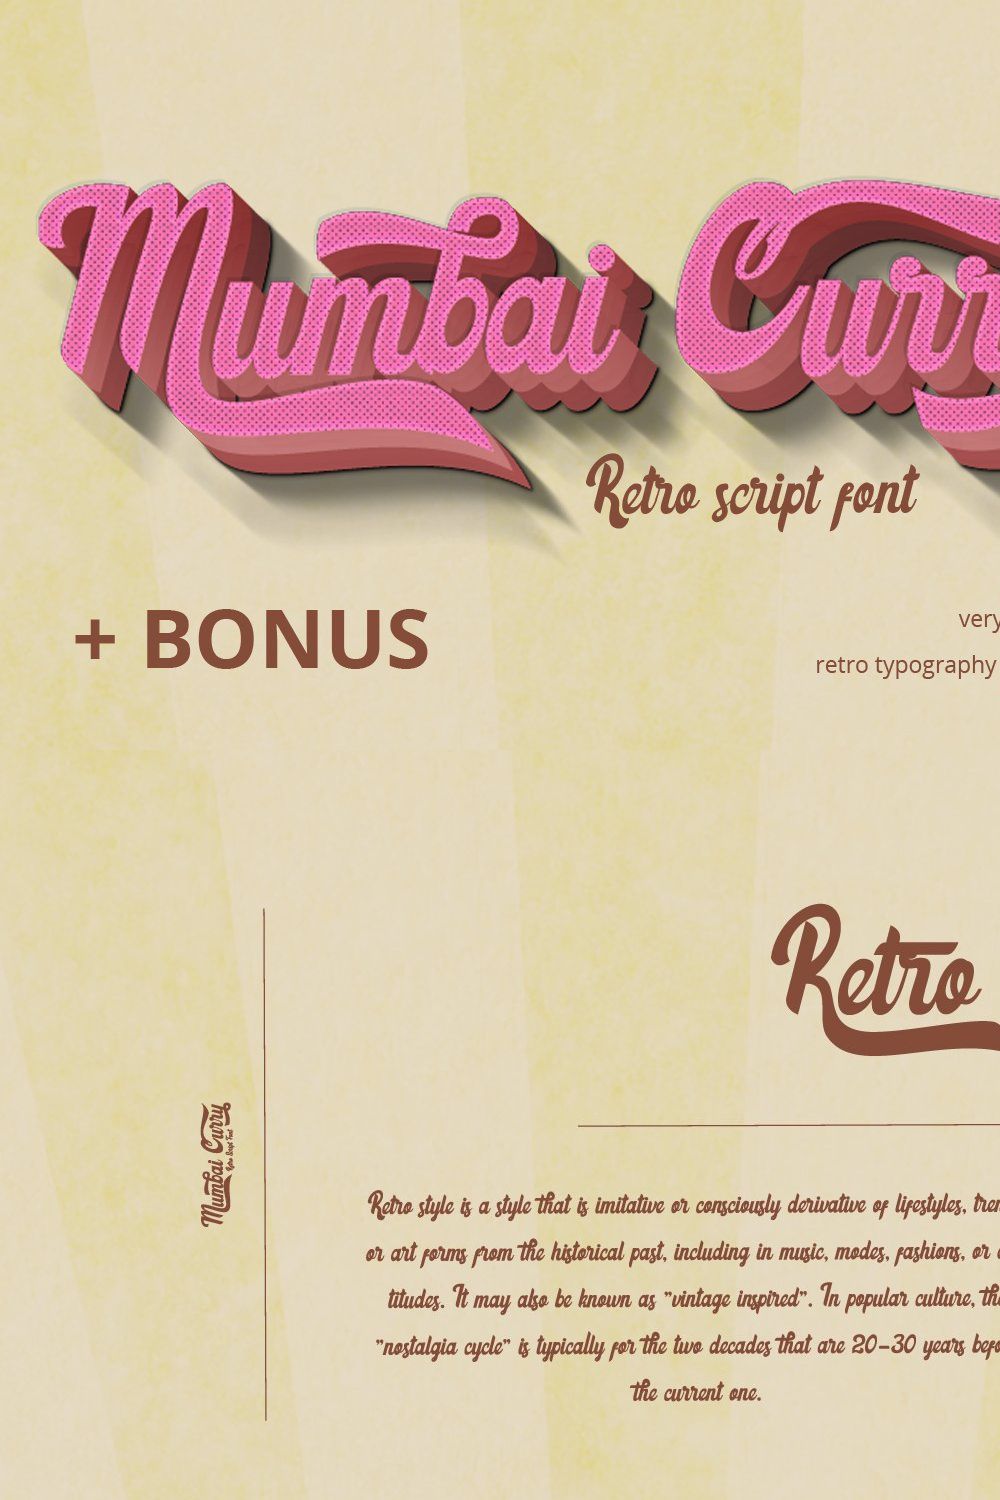 Mumbai Groovy Retro Font + BONUS pinterest preview image.